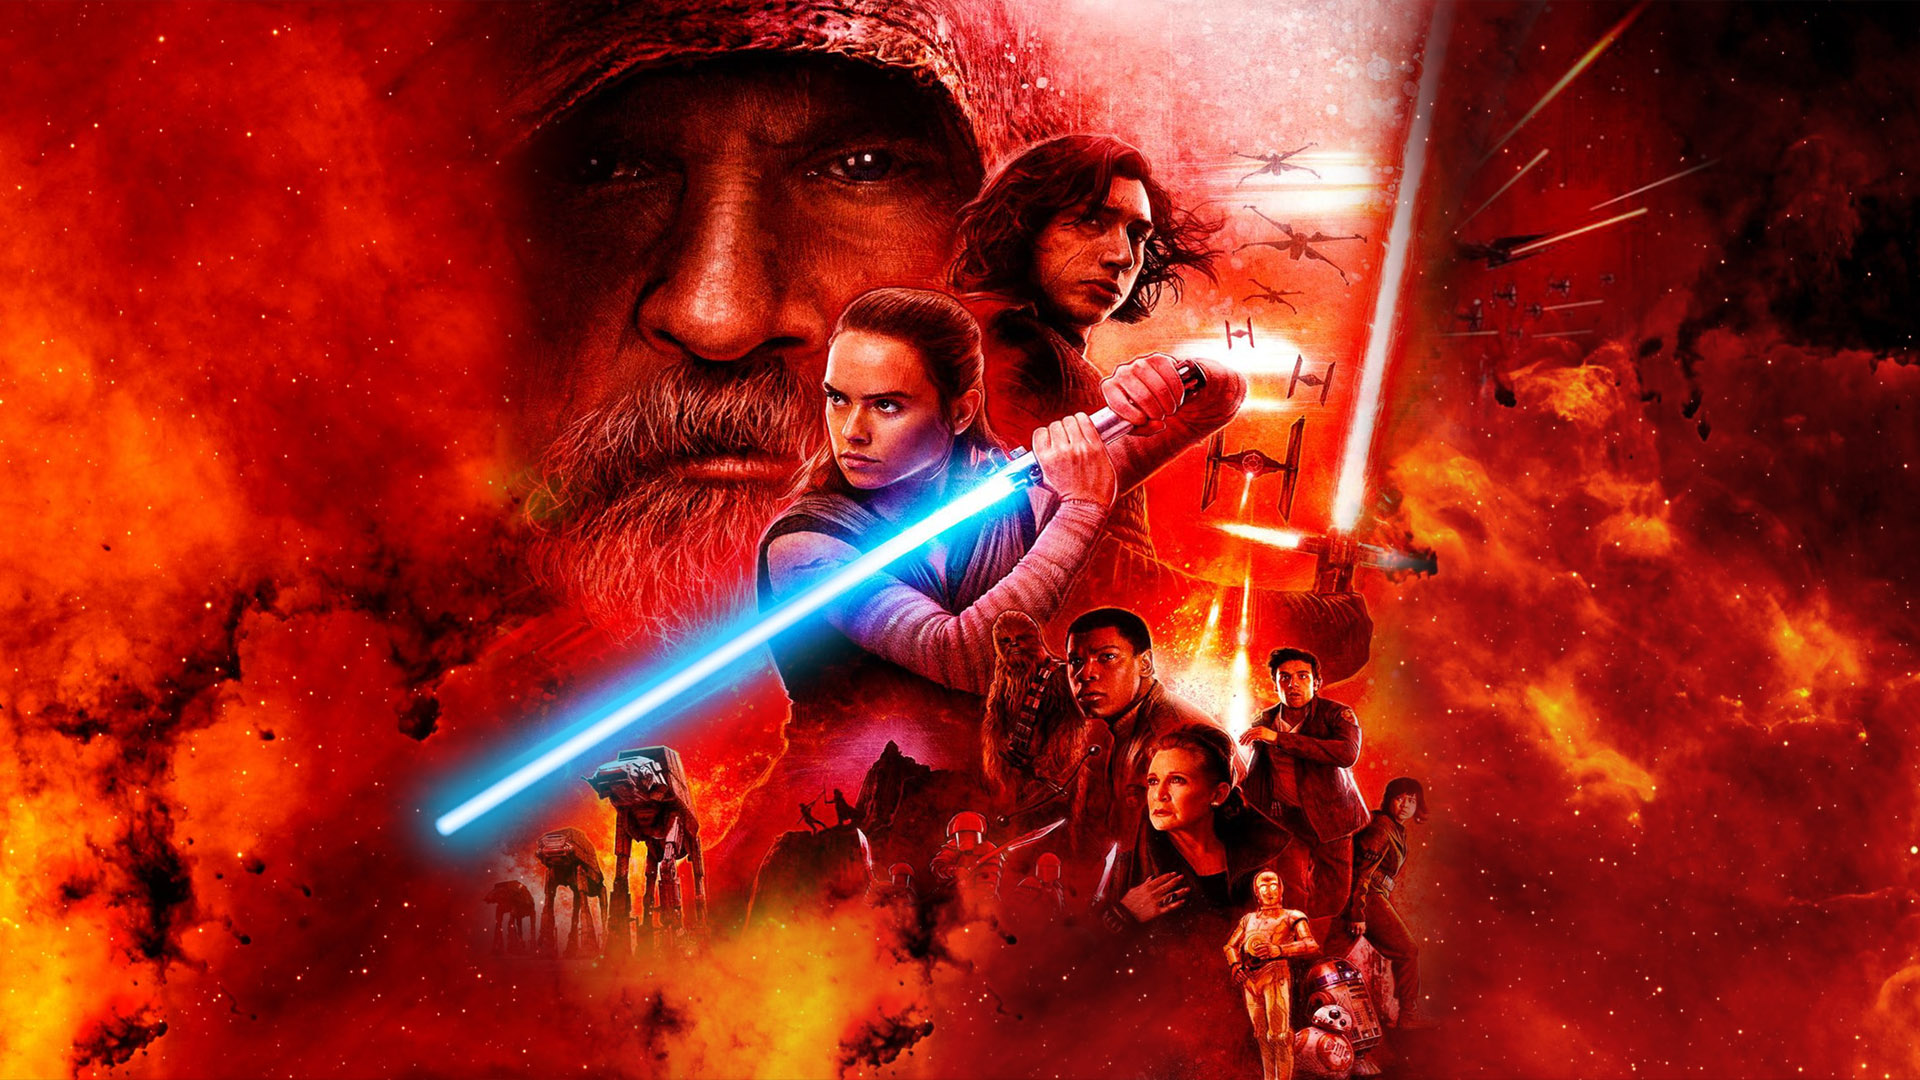 Star Wars: The Last Jedi poster concept by Thekingblader995 on DeviantArt